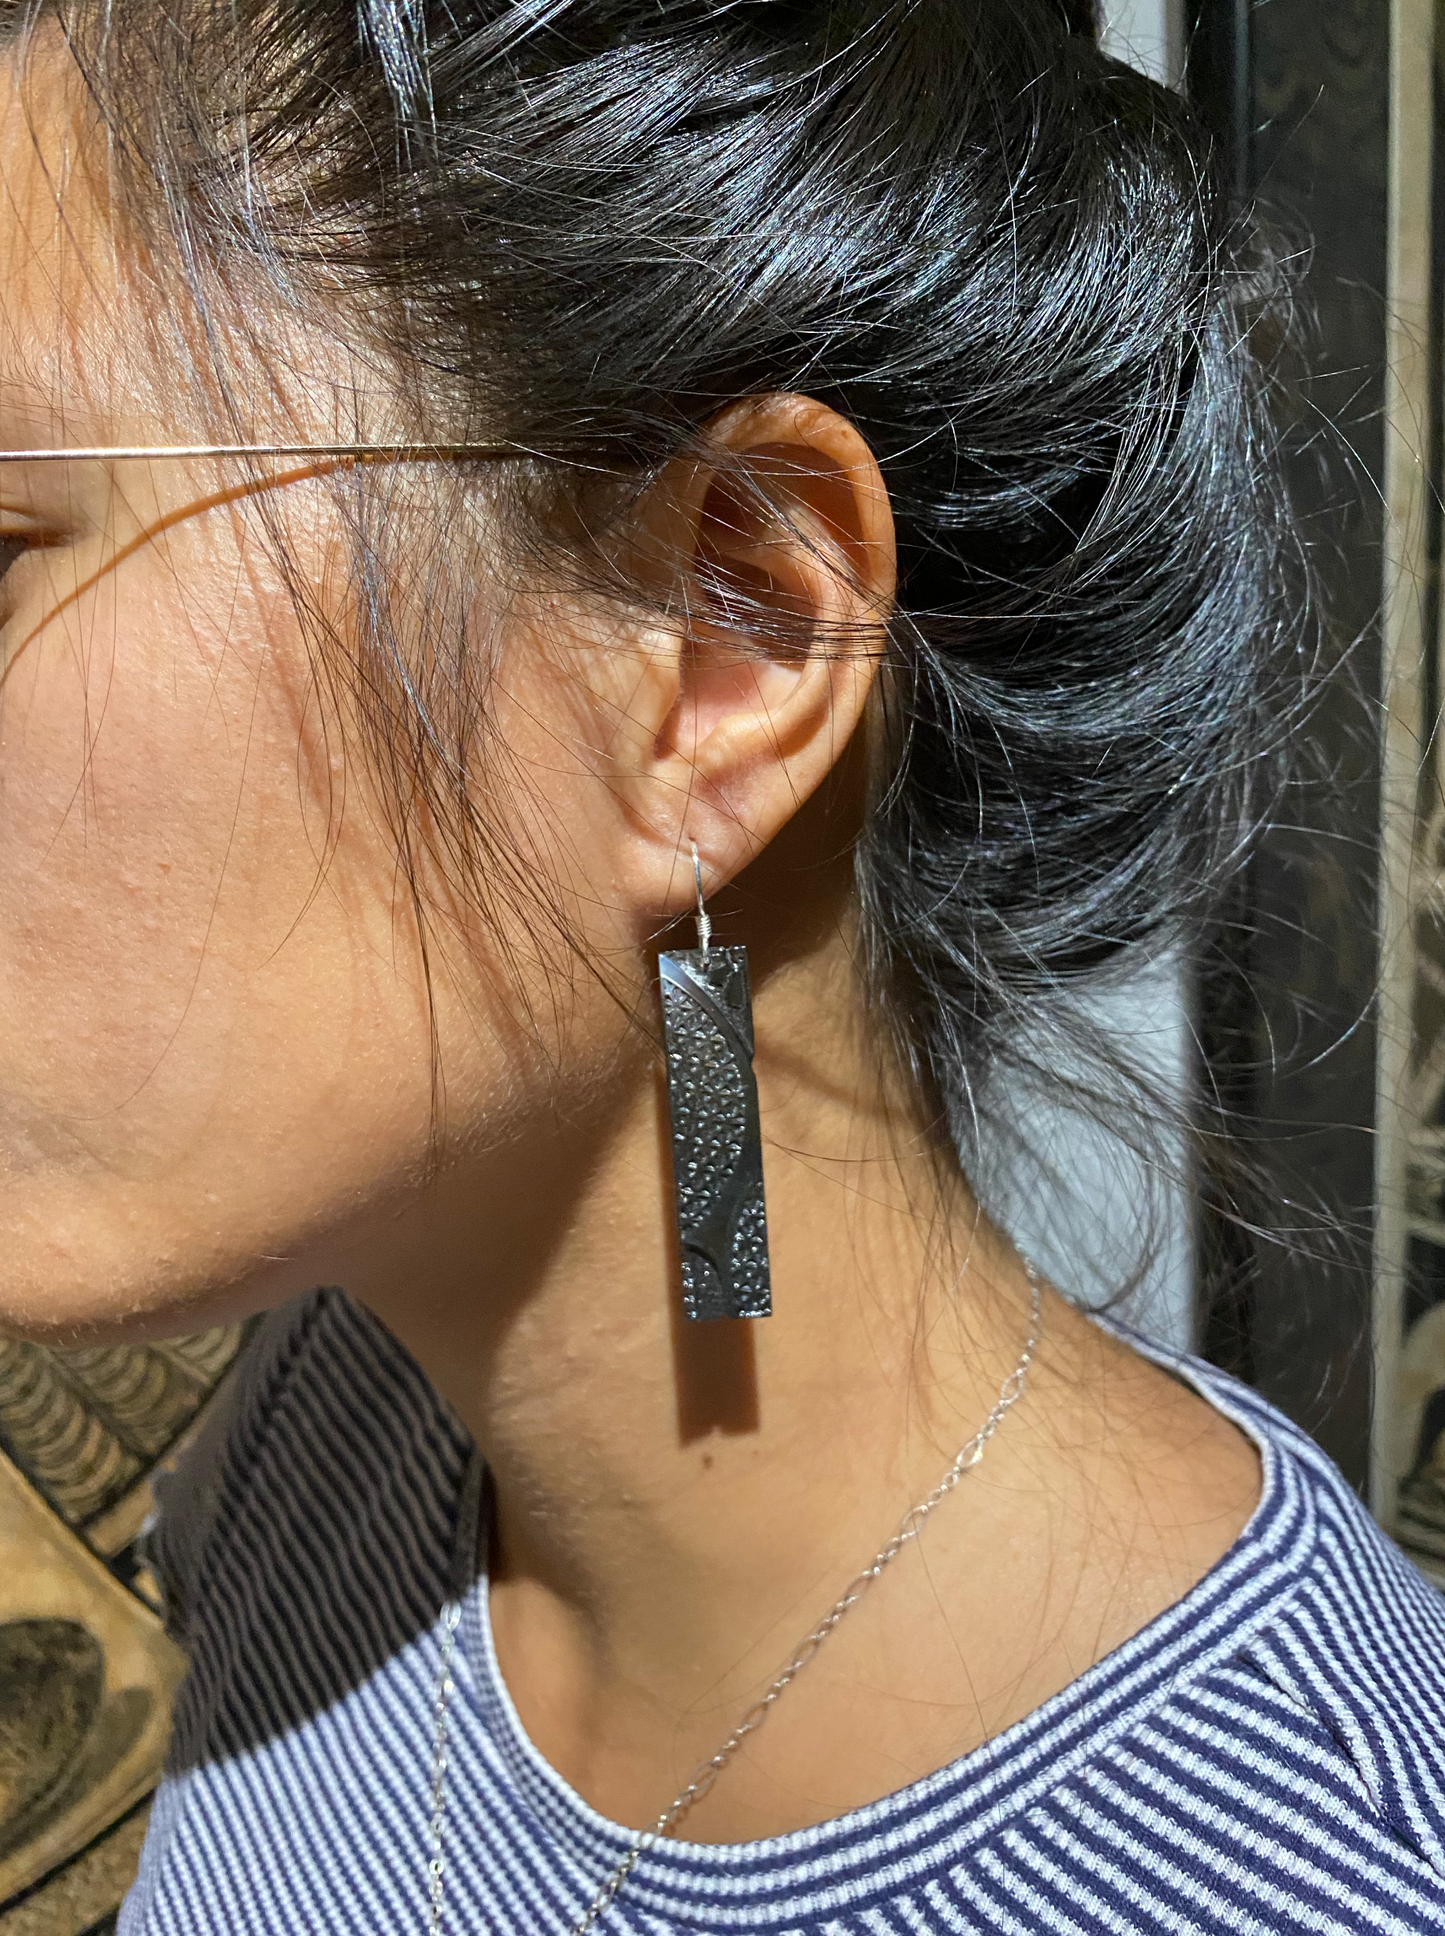 ethnic earrings nacre maori traditional design polynesian by Prokop Tahiti